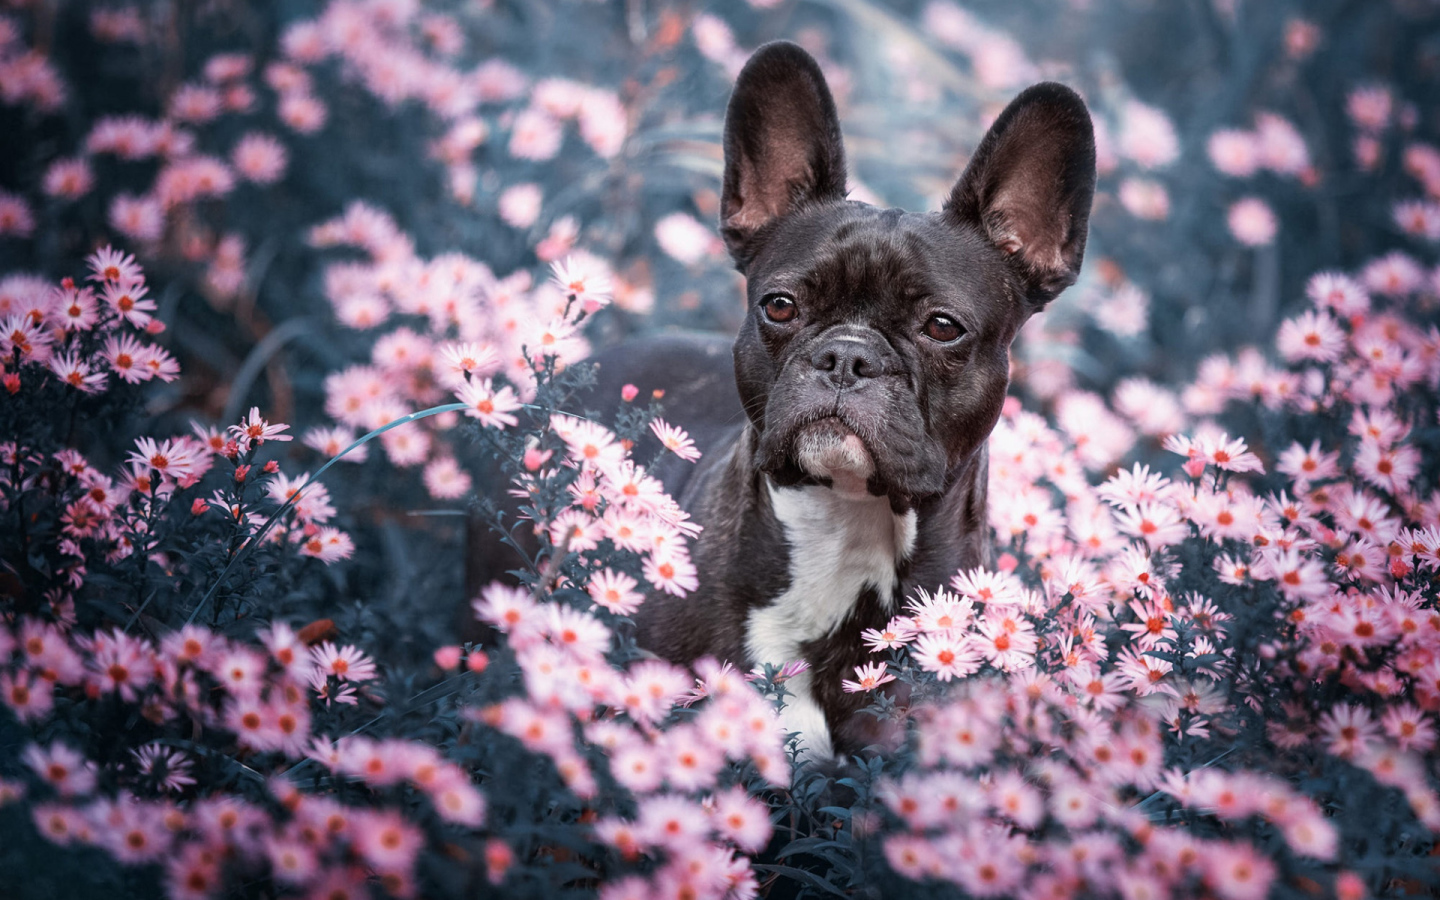 Black french bulldog sitting in flowers